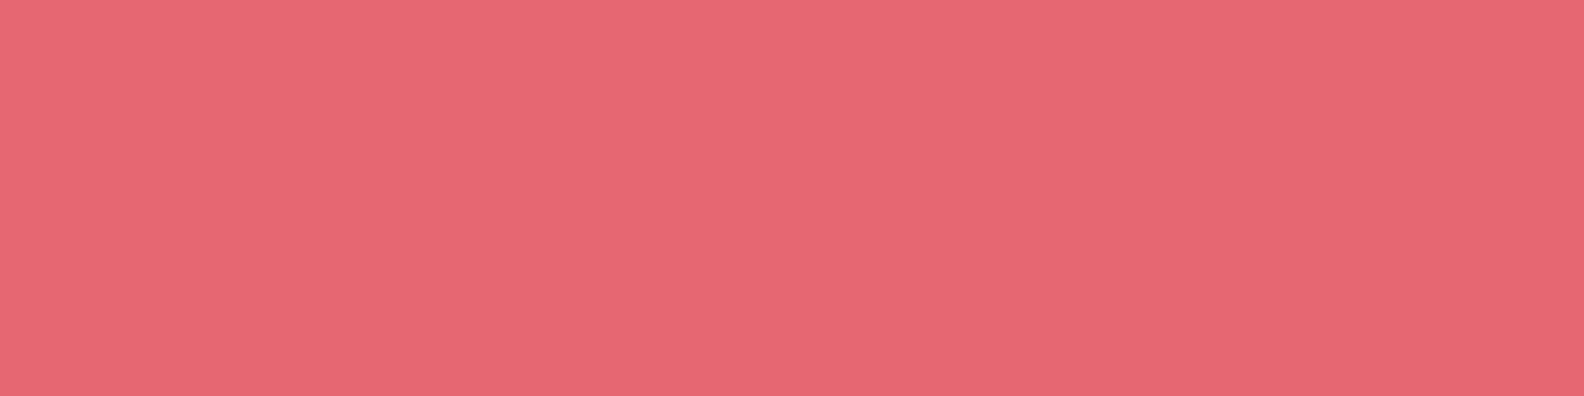 1584x396 Light Carmine Pink Solid Color Background